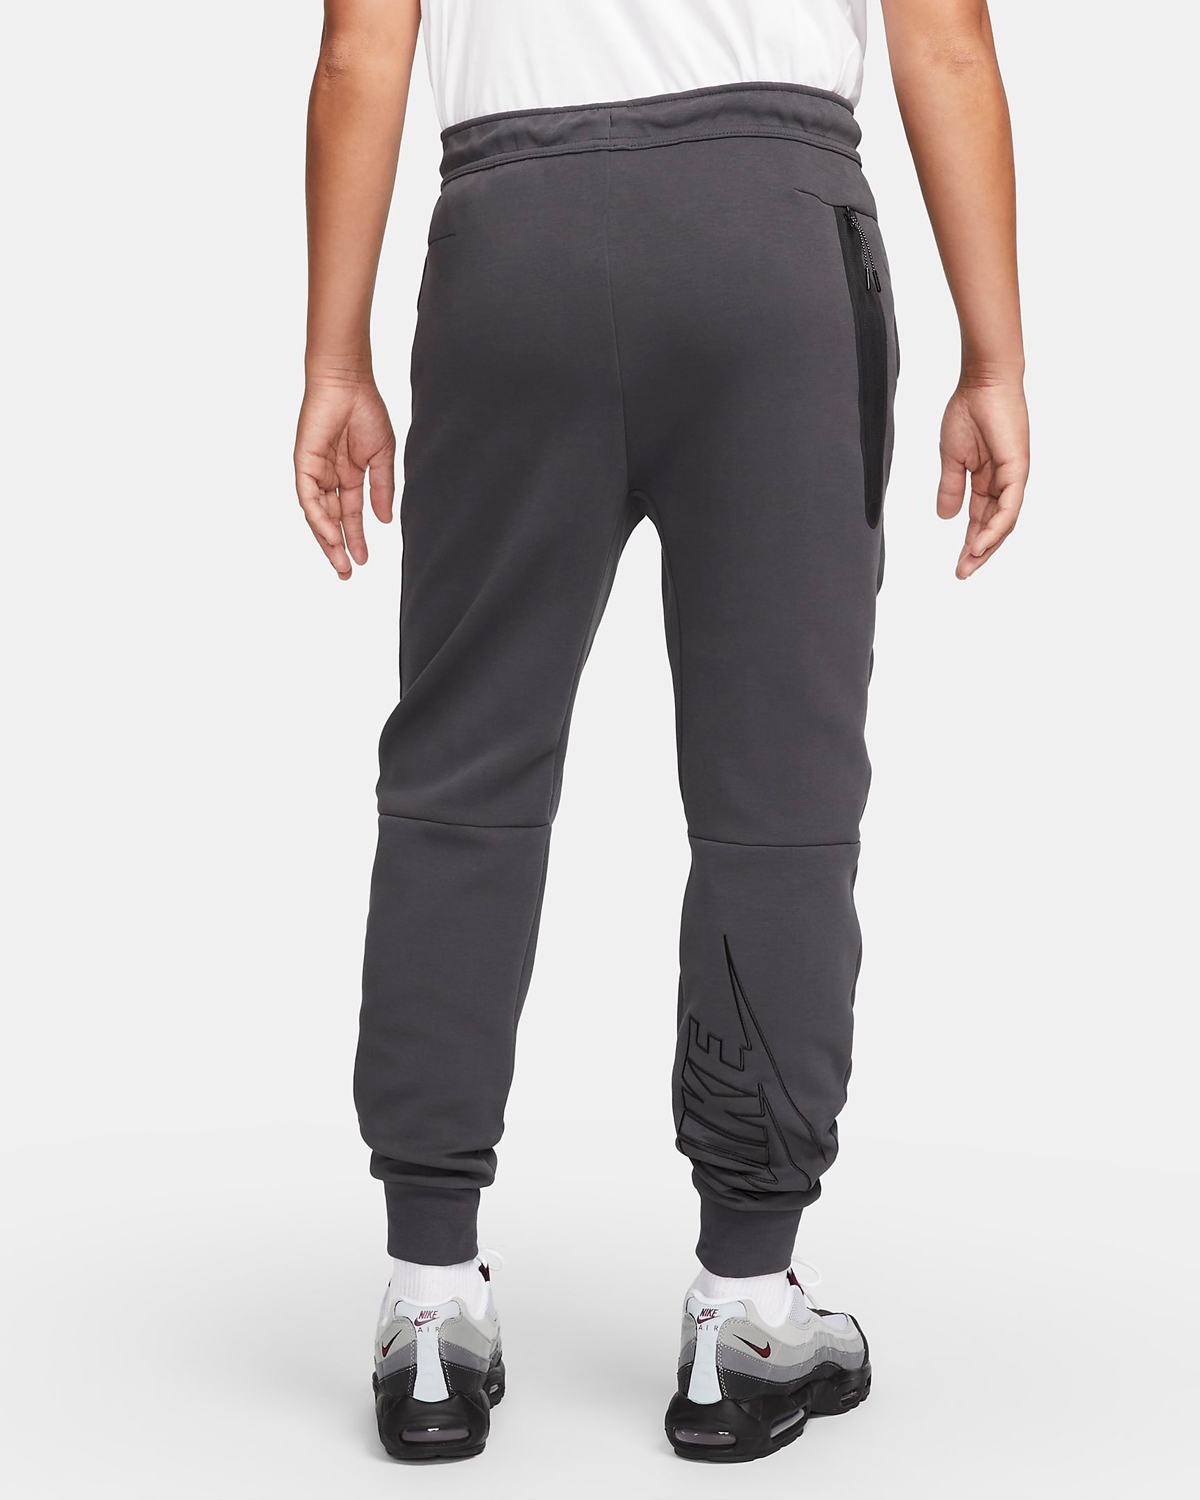 Nike-Tech-Fleece-Anthracite-Jogger-Pants-2